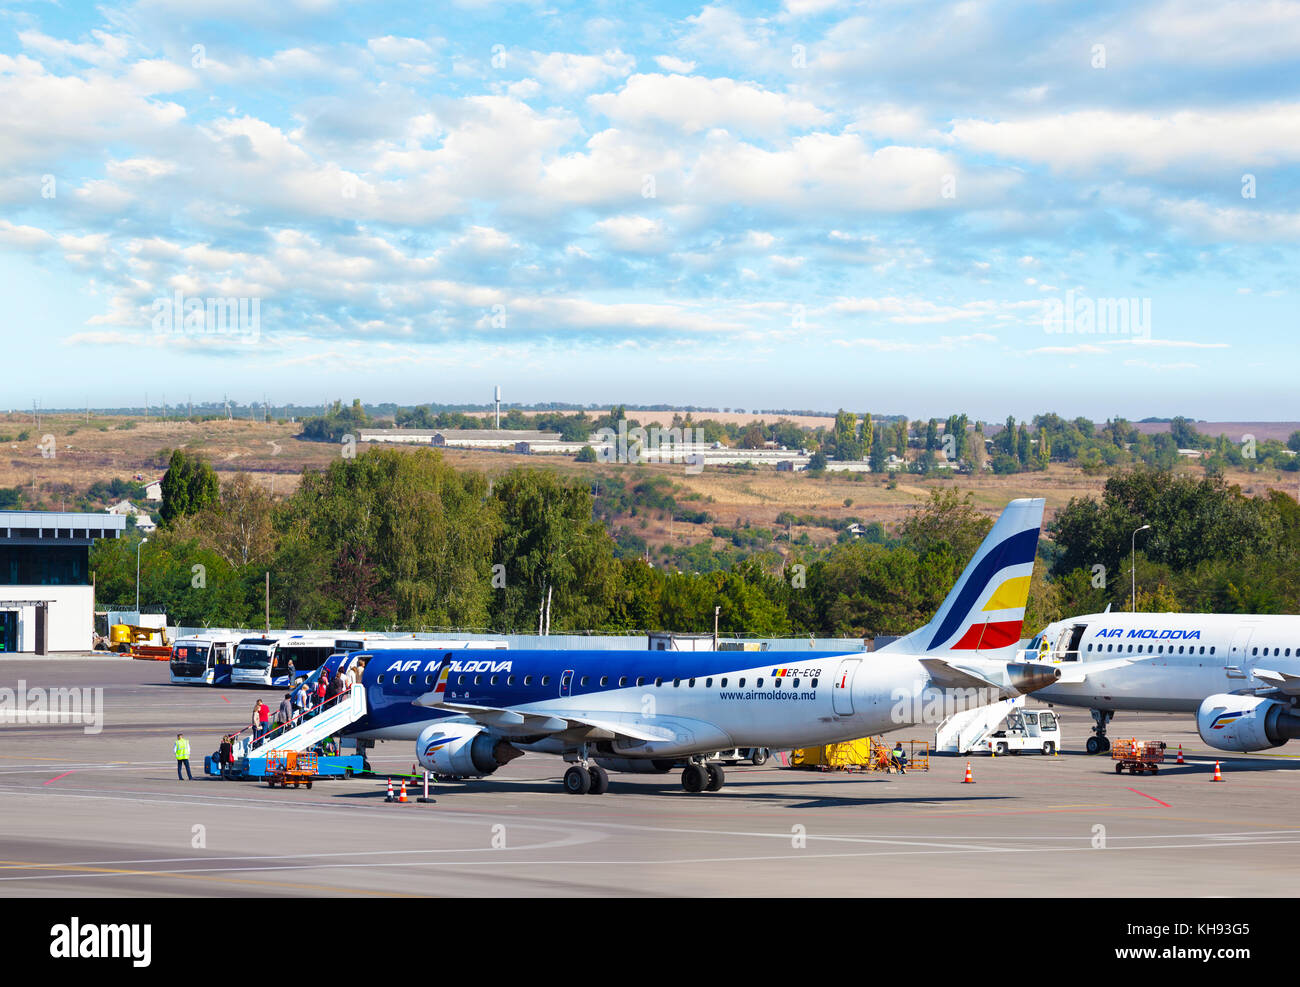 Chisinau, Moldova - November 18, 2016: The Air Moldova aircraft on the runway of the international airport Stock Photo